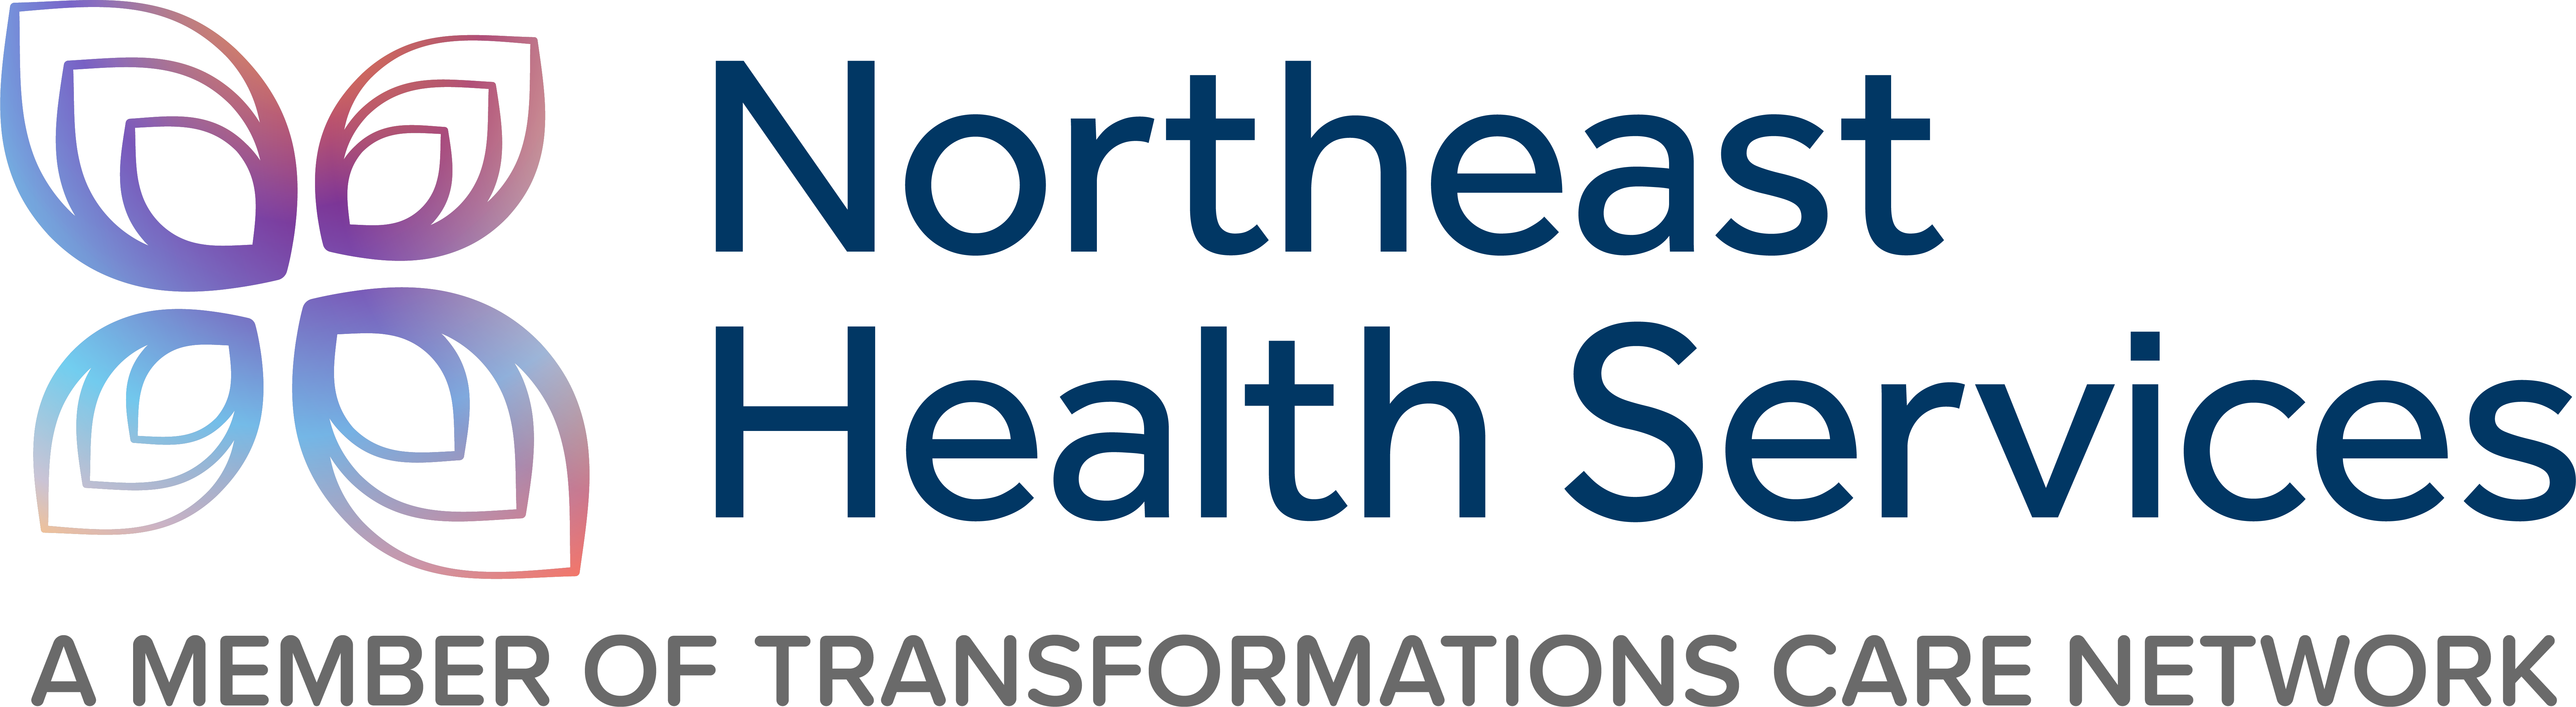 Northeast Health Services logo